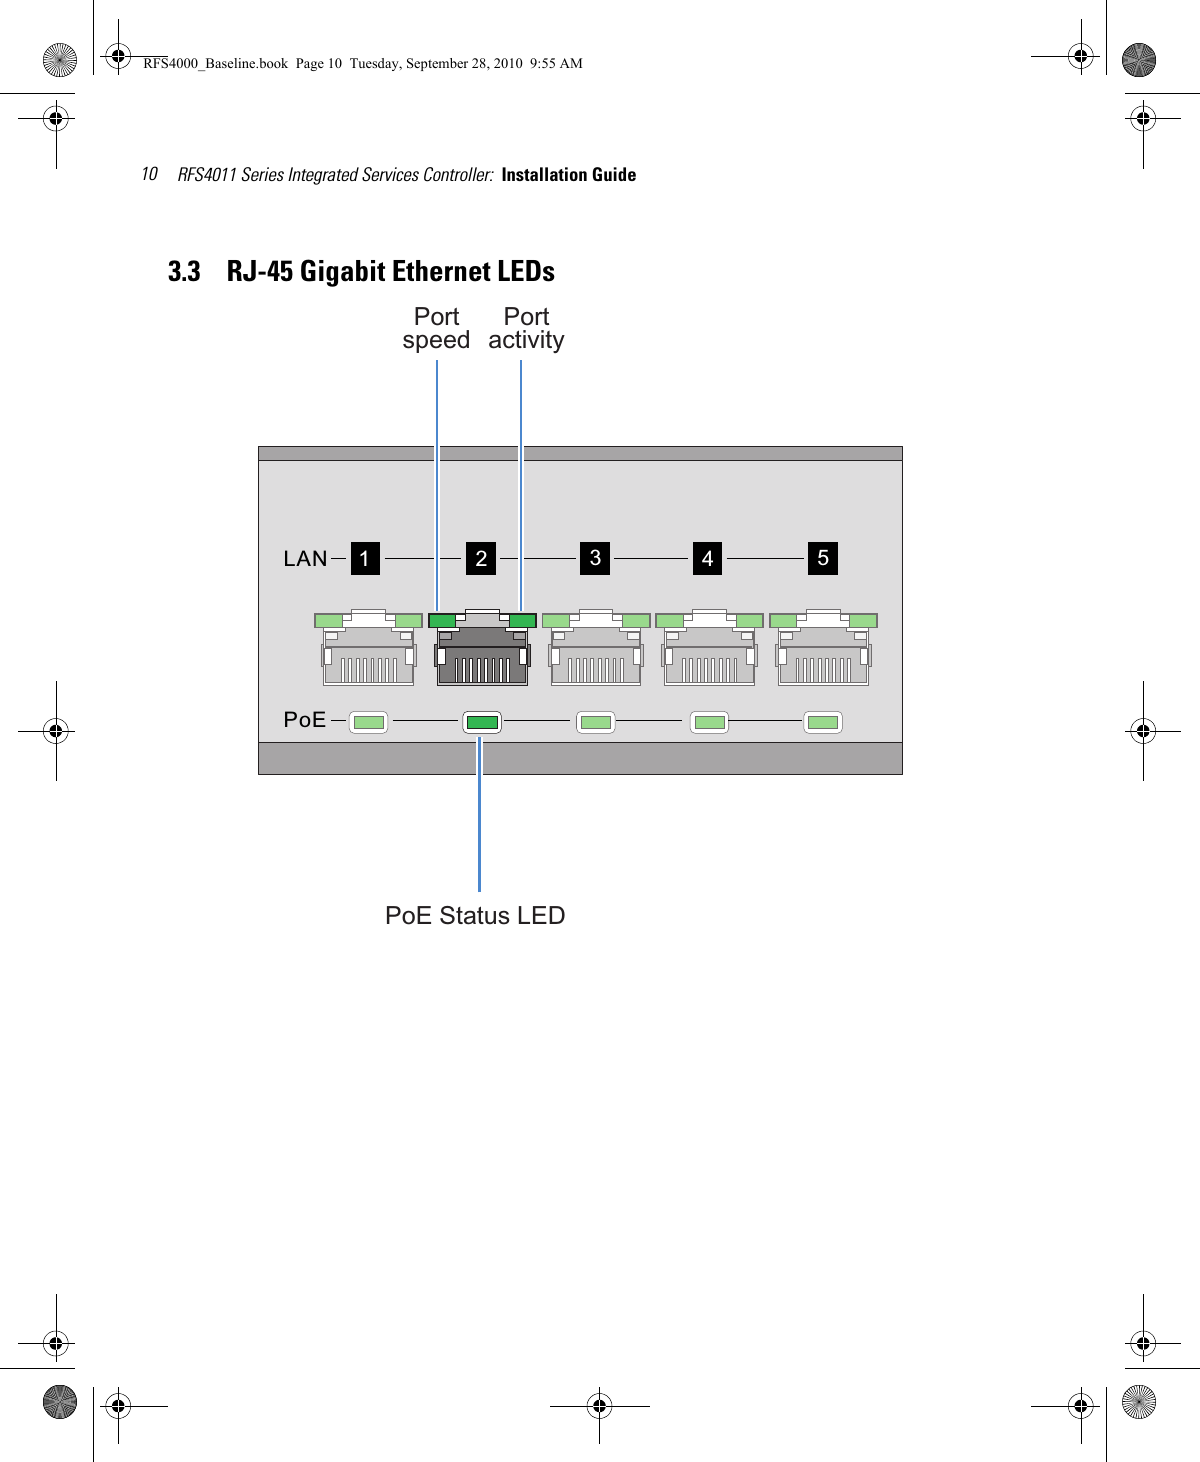 RFS4011 Series Integrated Services Controller:  Installation Guide 103.3    RJ-45 Gigabit Ethernet LEDs54321LANPoEPortspeed PortactivityPoE Status LEDRFS4000_Baseline.book  Page 10  Tuesday, September 28, 2010  9:55 AM